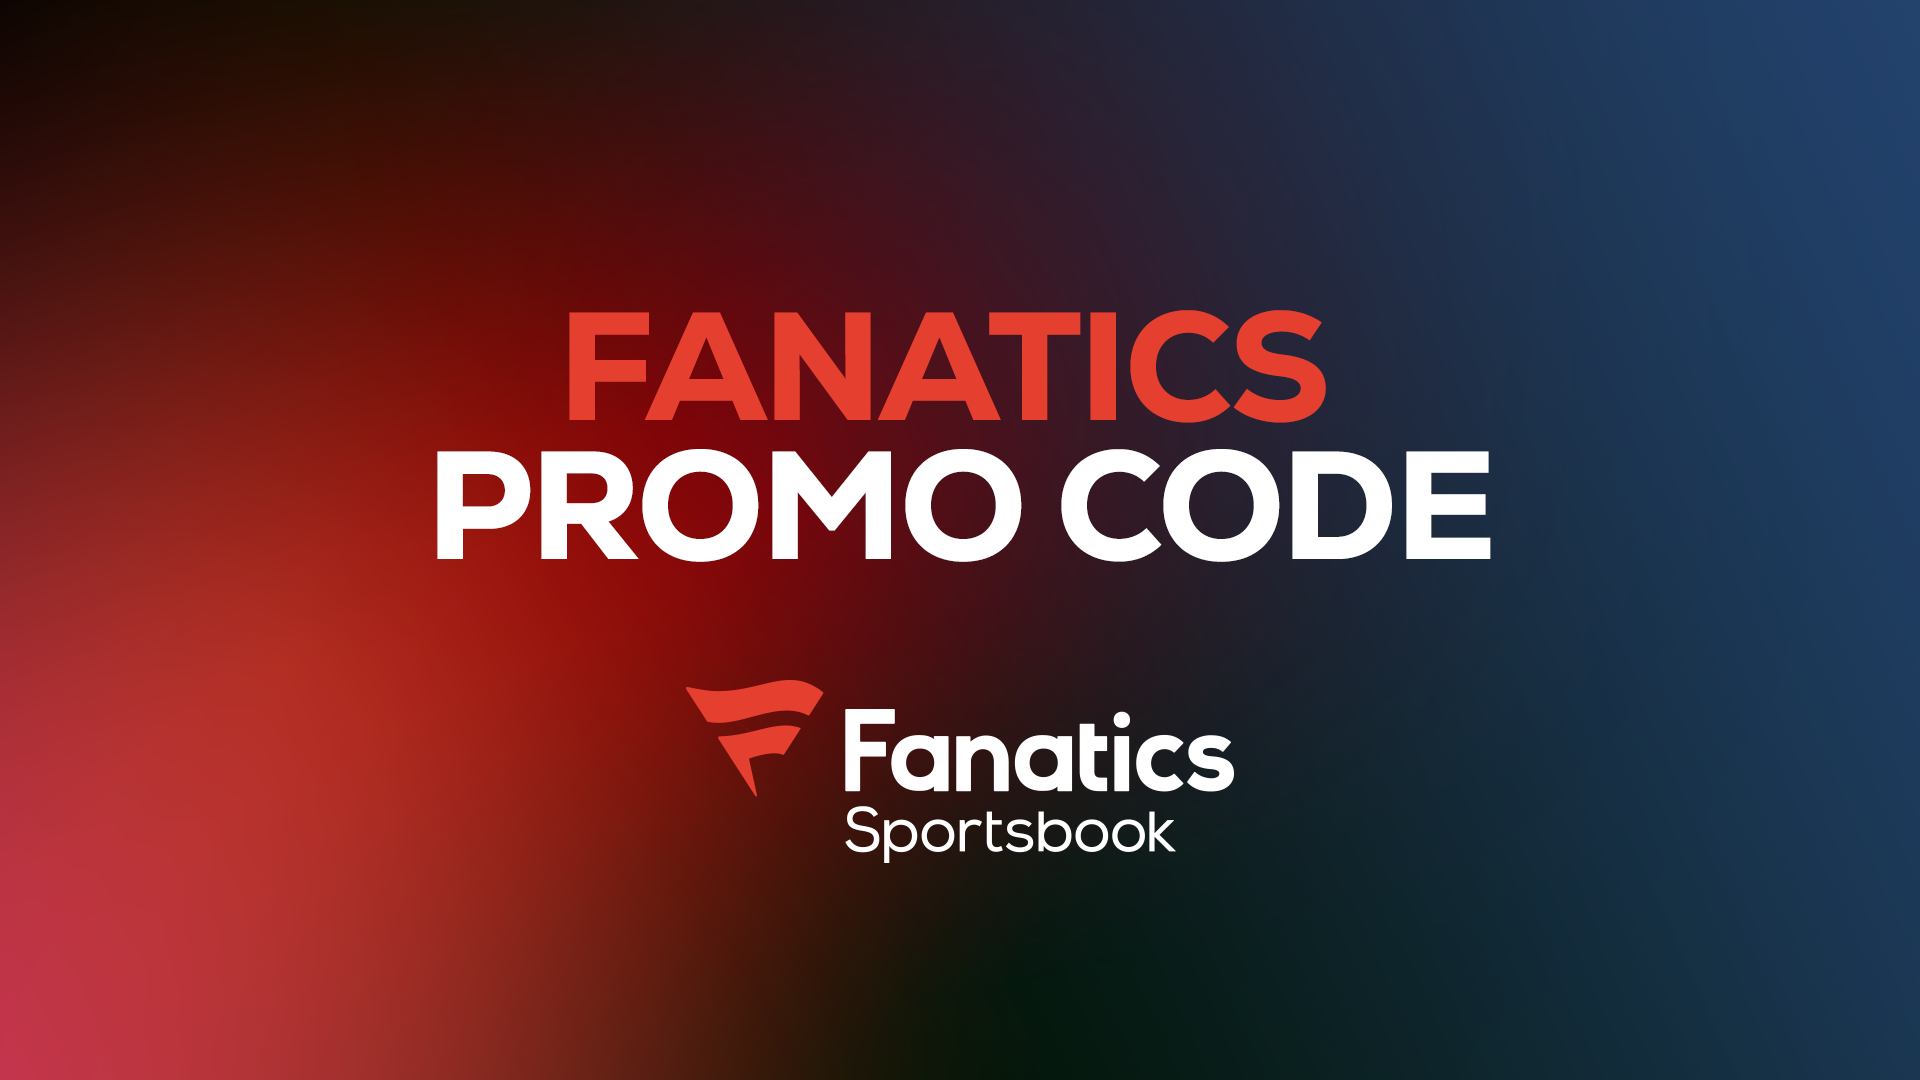 Fanatics Sportsbook promo: Get ,000 bonus match offer for NBA, NHL, MLB